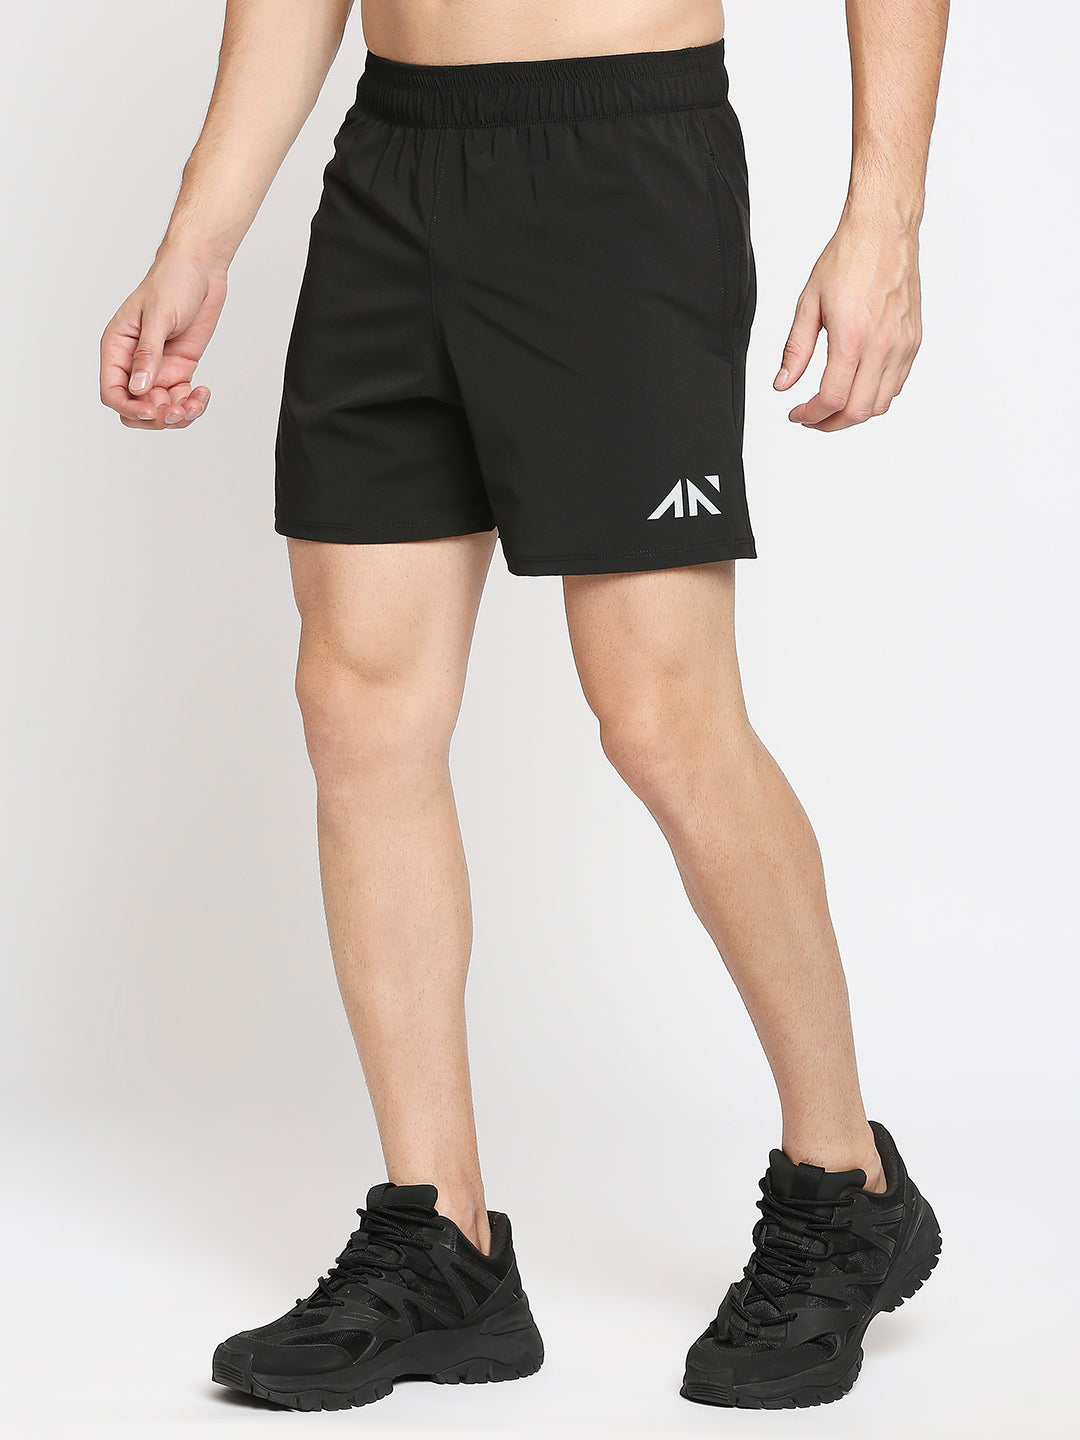 Nike Aeroswift Tight Half Short - Men's - Clothing